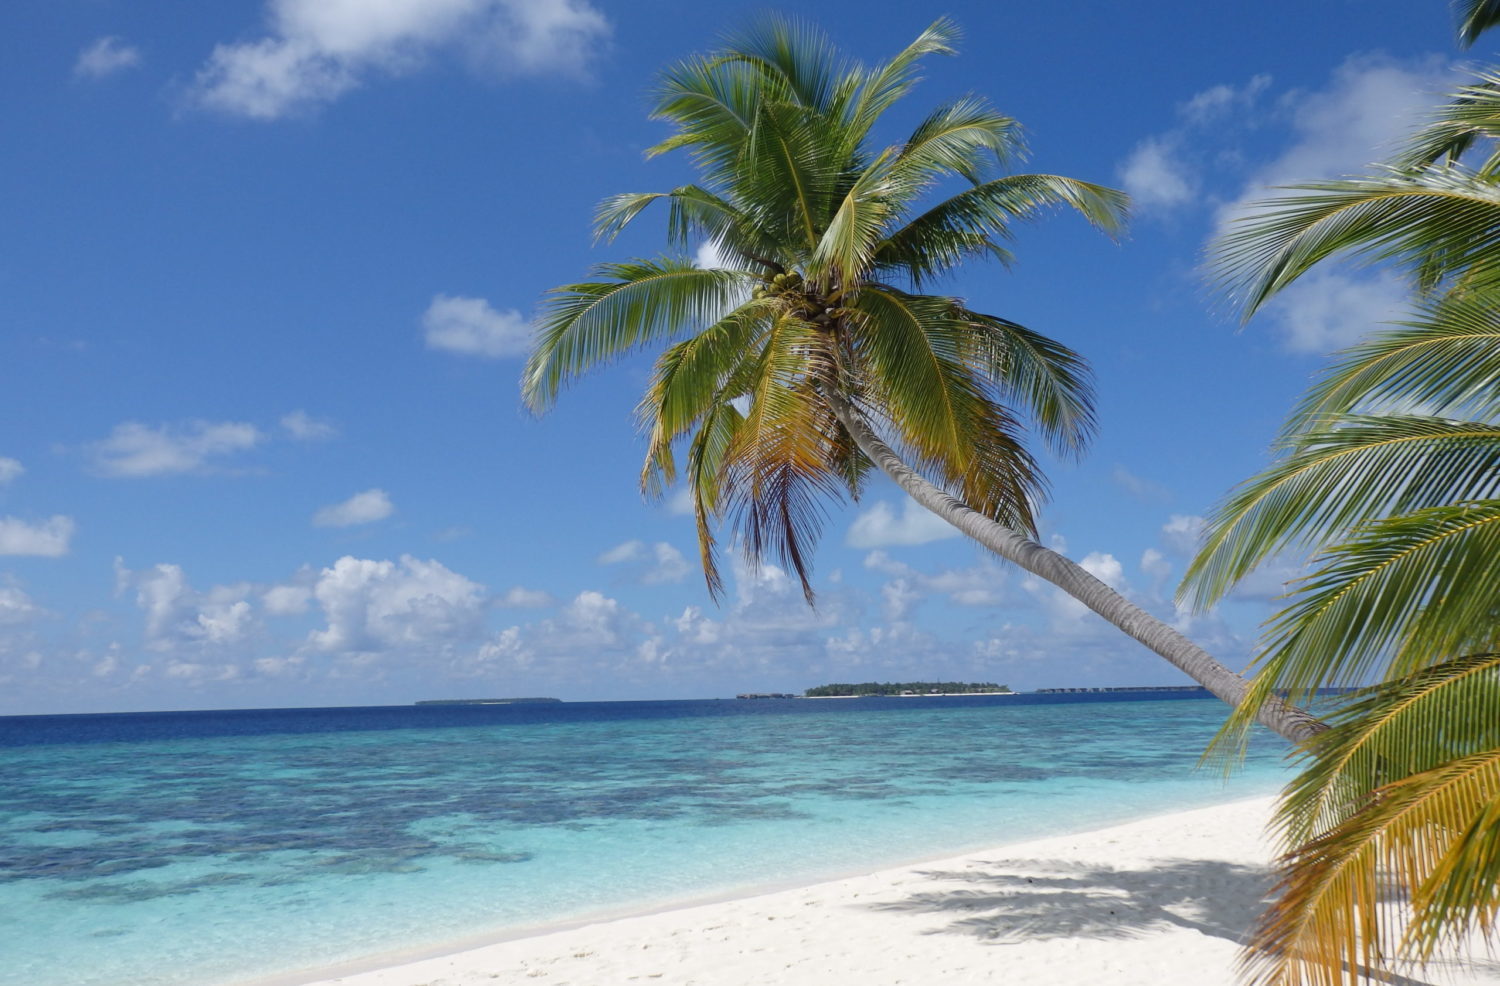 The Maldives-Helengeli Island Resort in Maldives tourism destinations